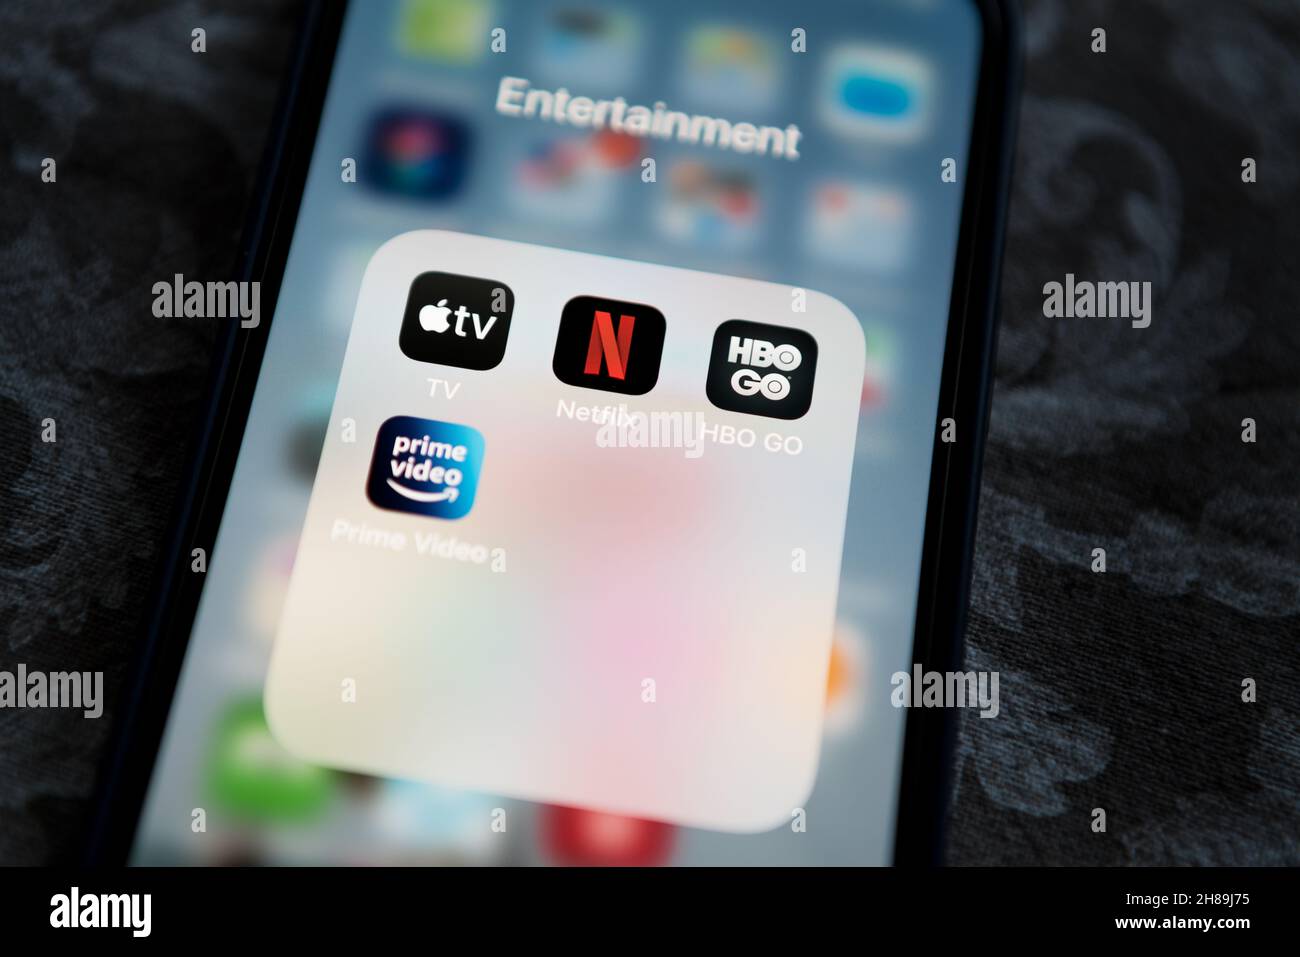 Krakow, Poland - July 14, 2021: Netflix application icon among Apple TV+, Amazon Prime Video, and HBO GO in Entertainment Folder on Apple iPhone 12 Pr Stock Photo